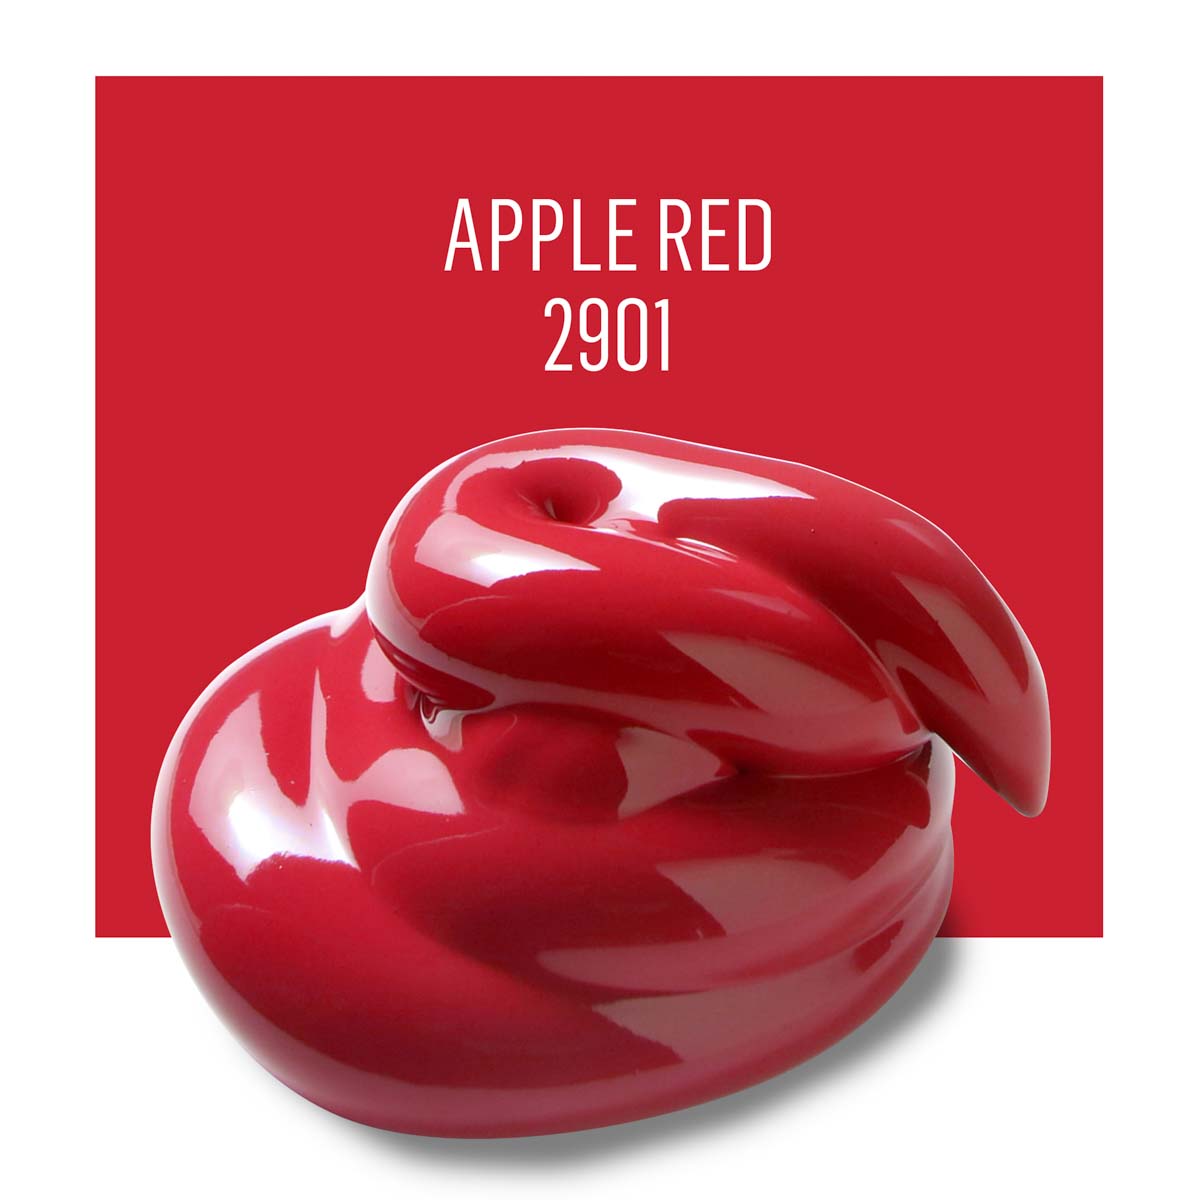 FolkArt ® Multi-Surface Satin Acrylic Paints - Apple Red, 2 oz. - 2901